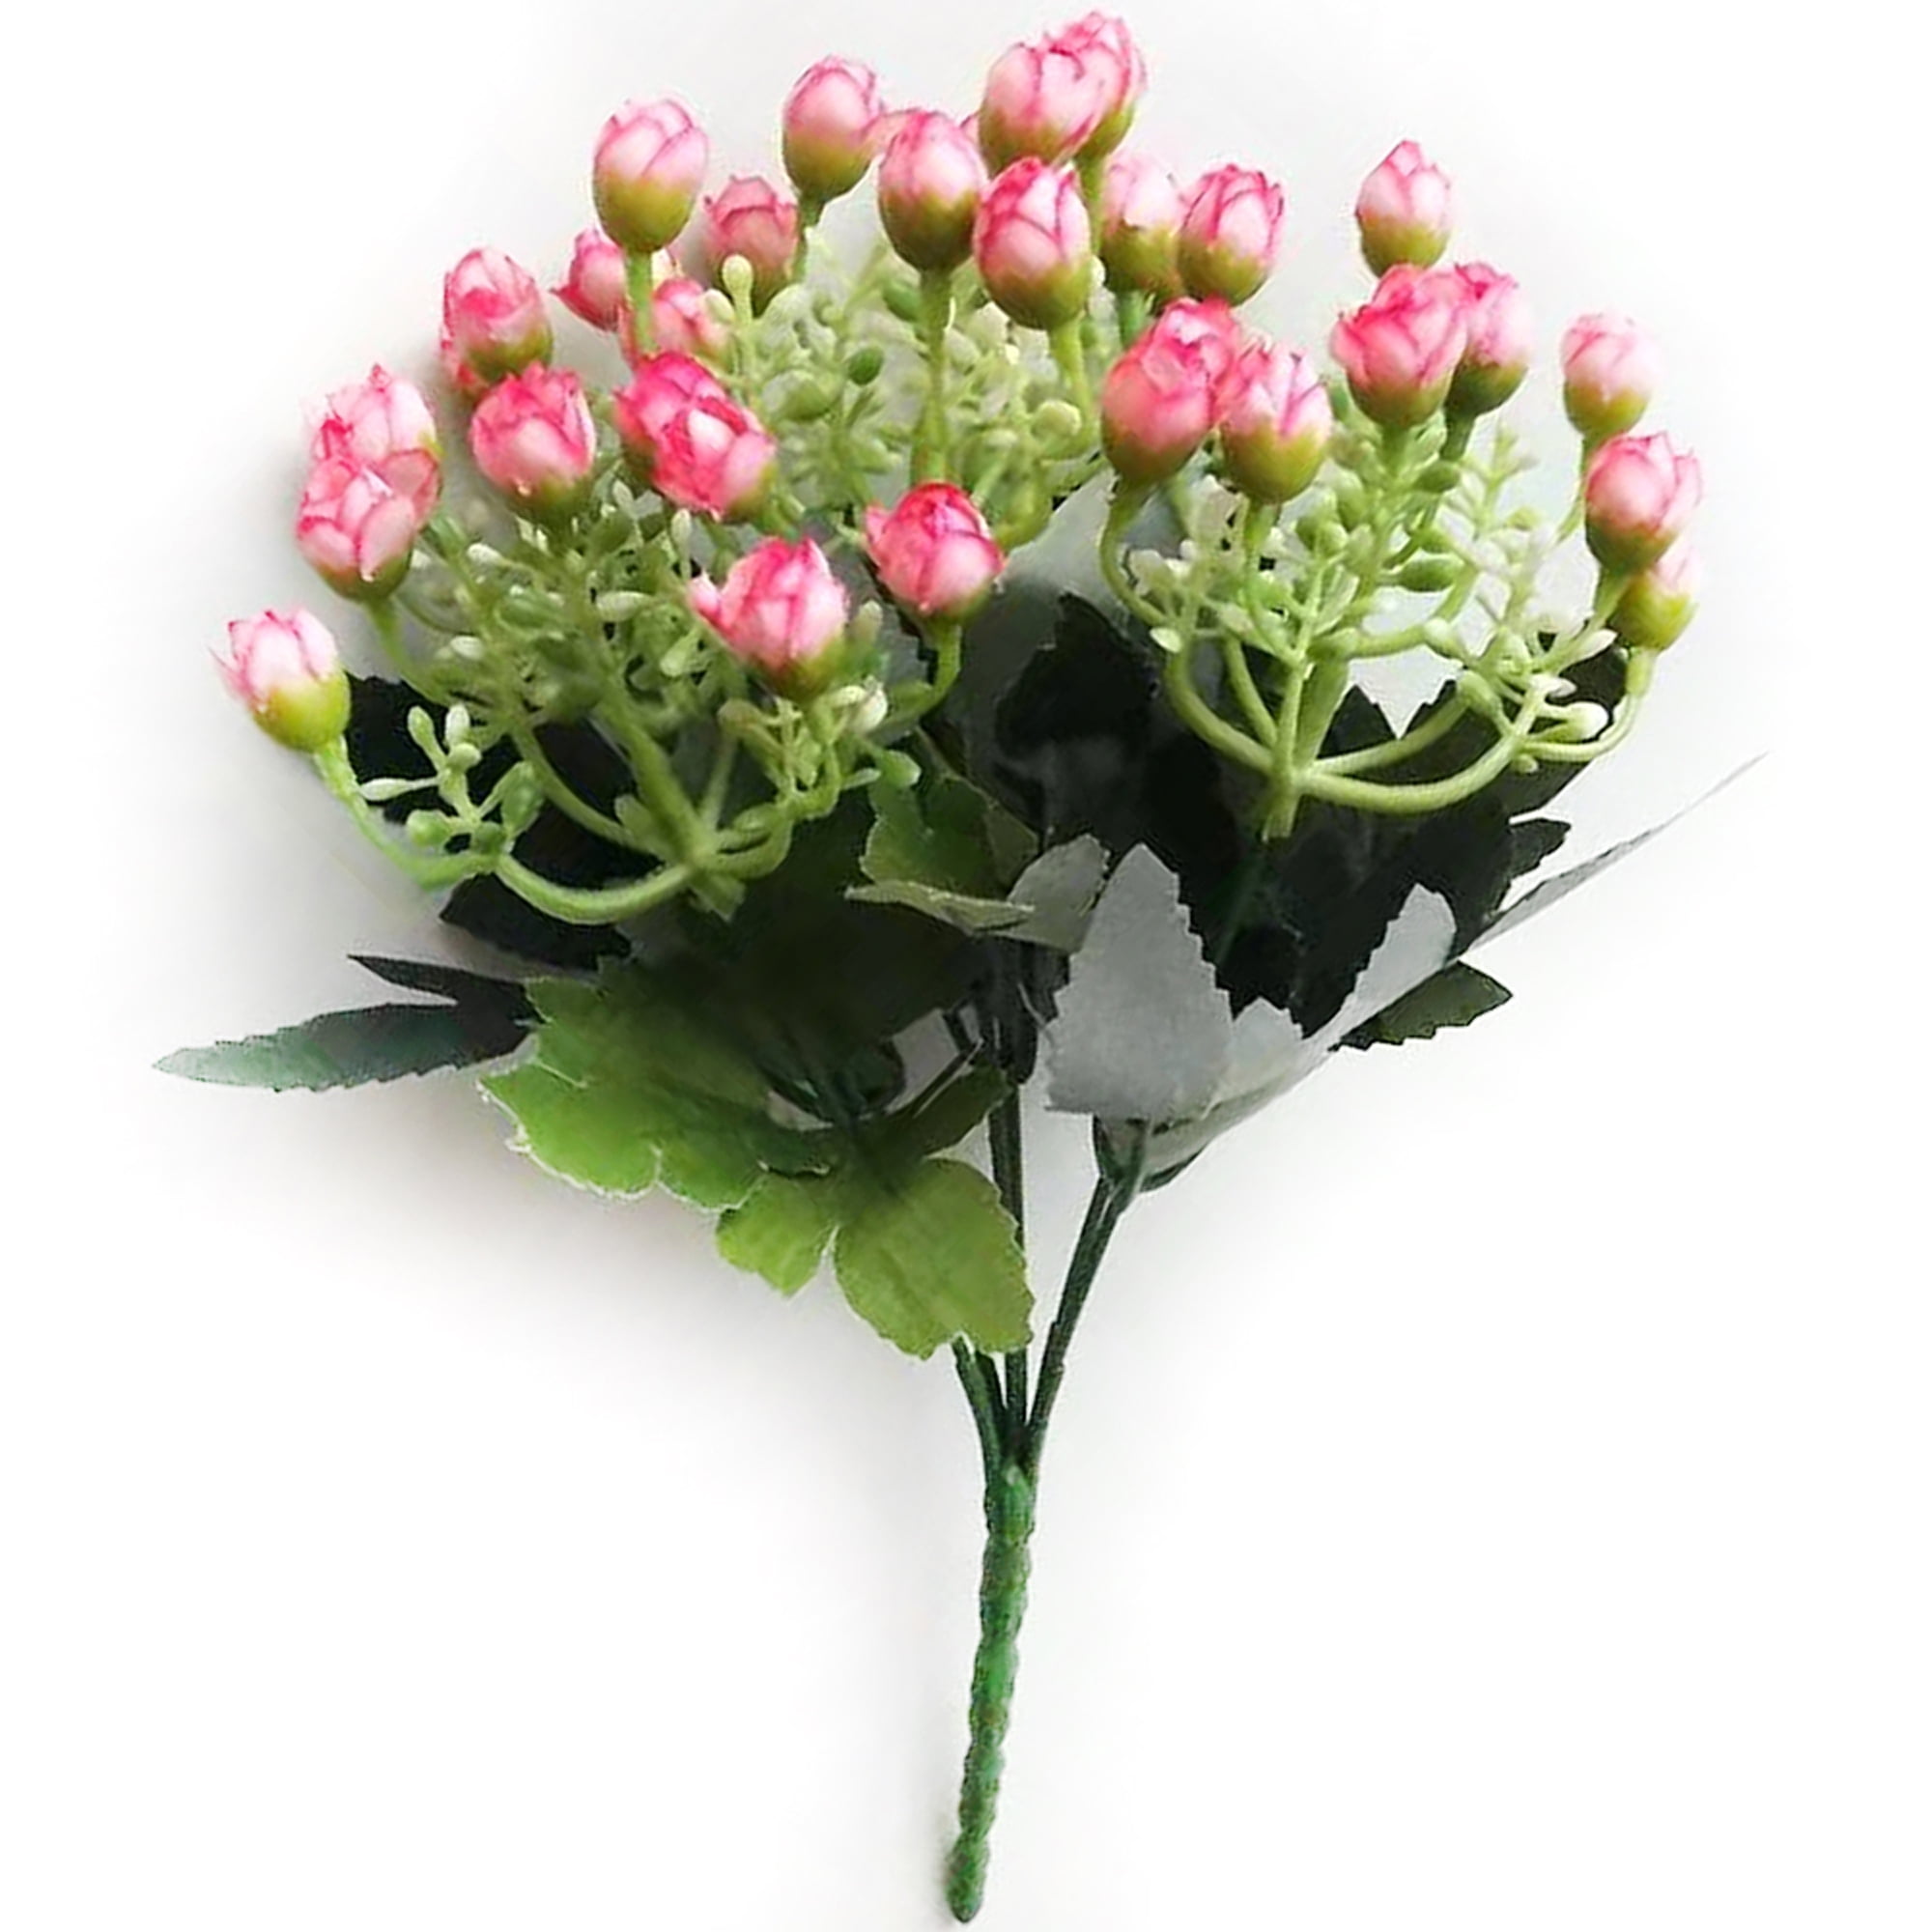 Details about   36HEADS ARTIFICIAL SILK FLOWERS BUNCH Wedding Grave Bouquet X-mas Gift New 